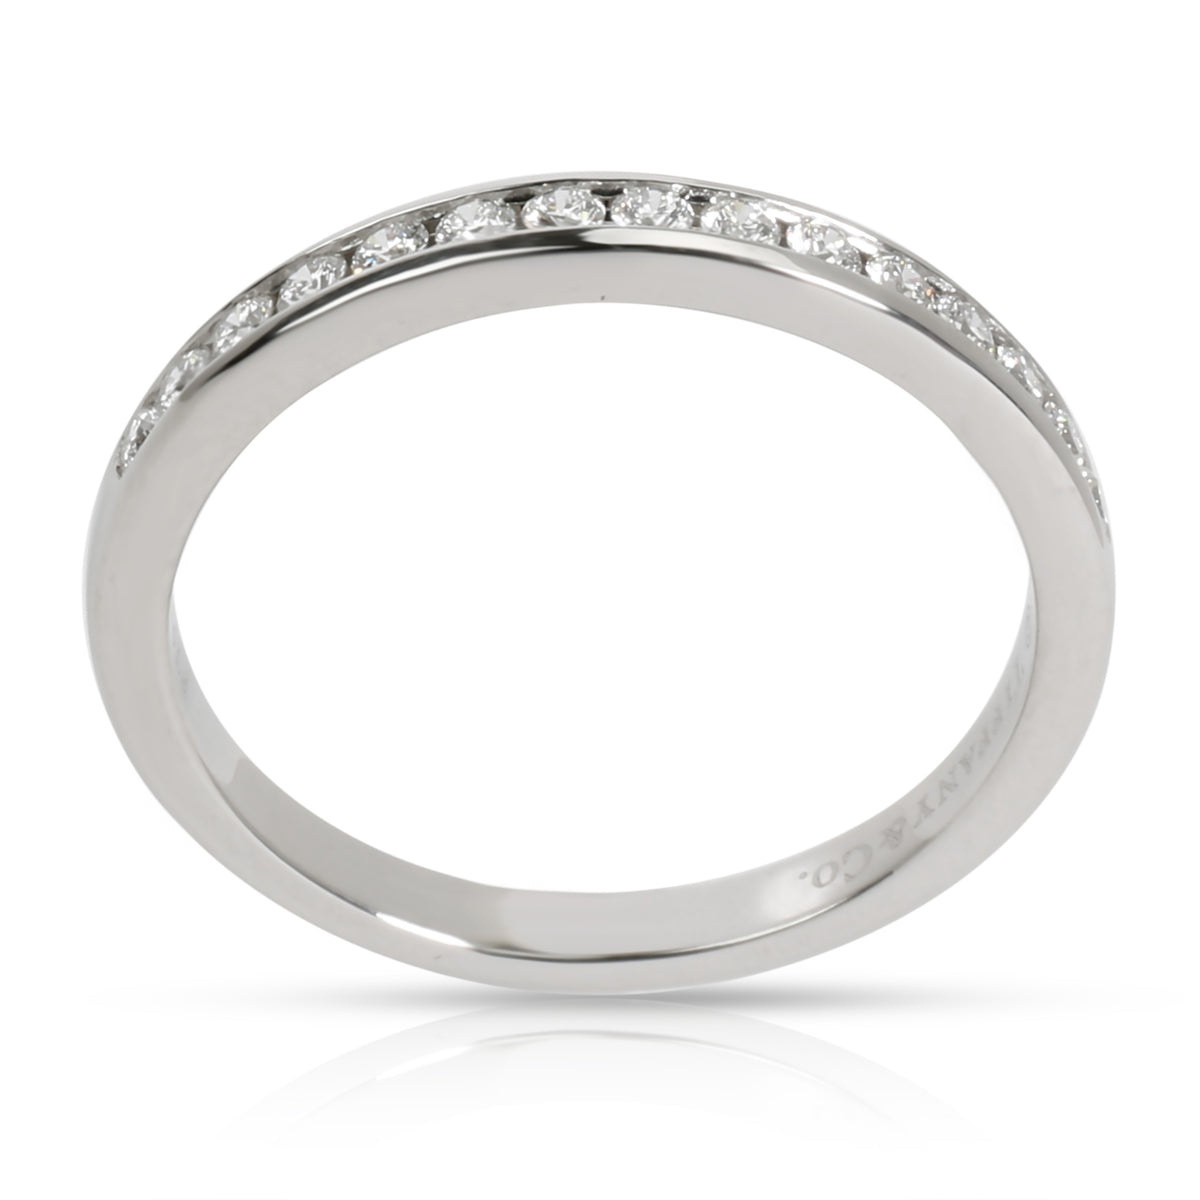 Tiffany & Co. Diamond Wedding Band in platinum, 15 stone 2 mm wide